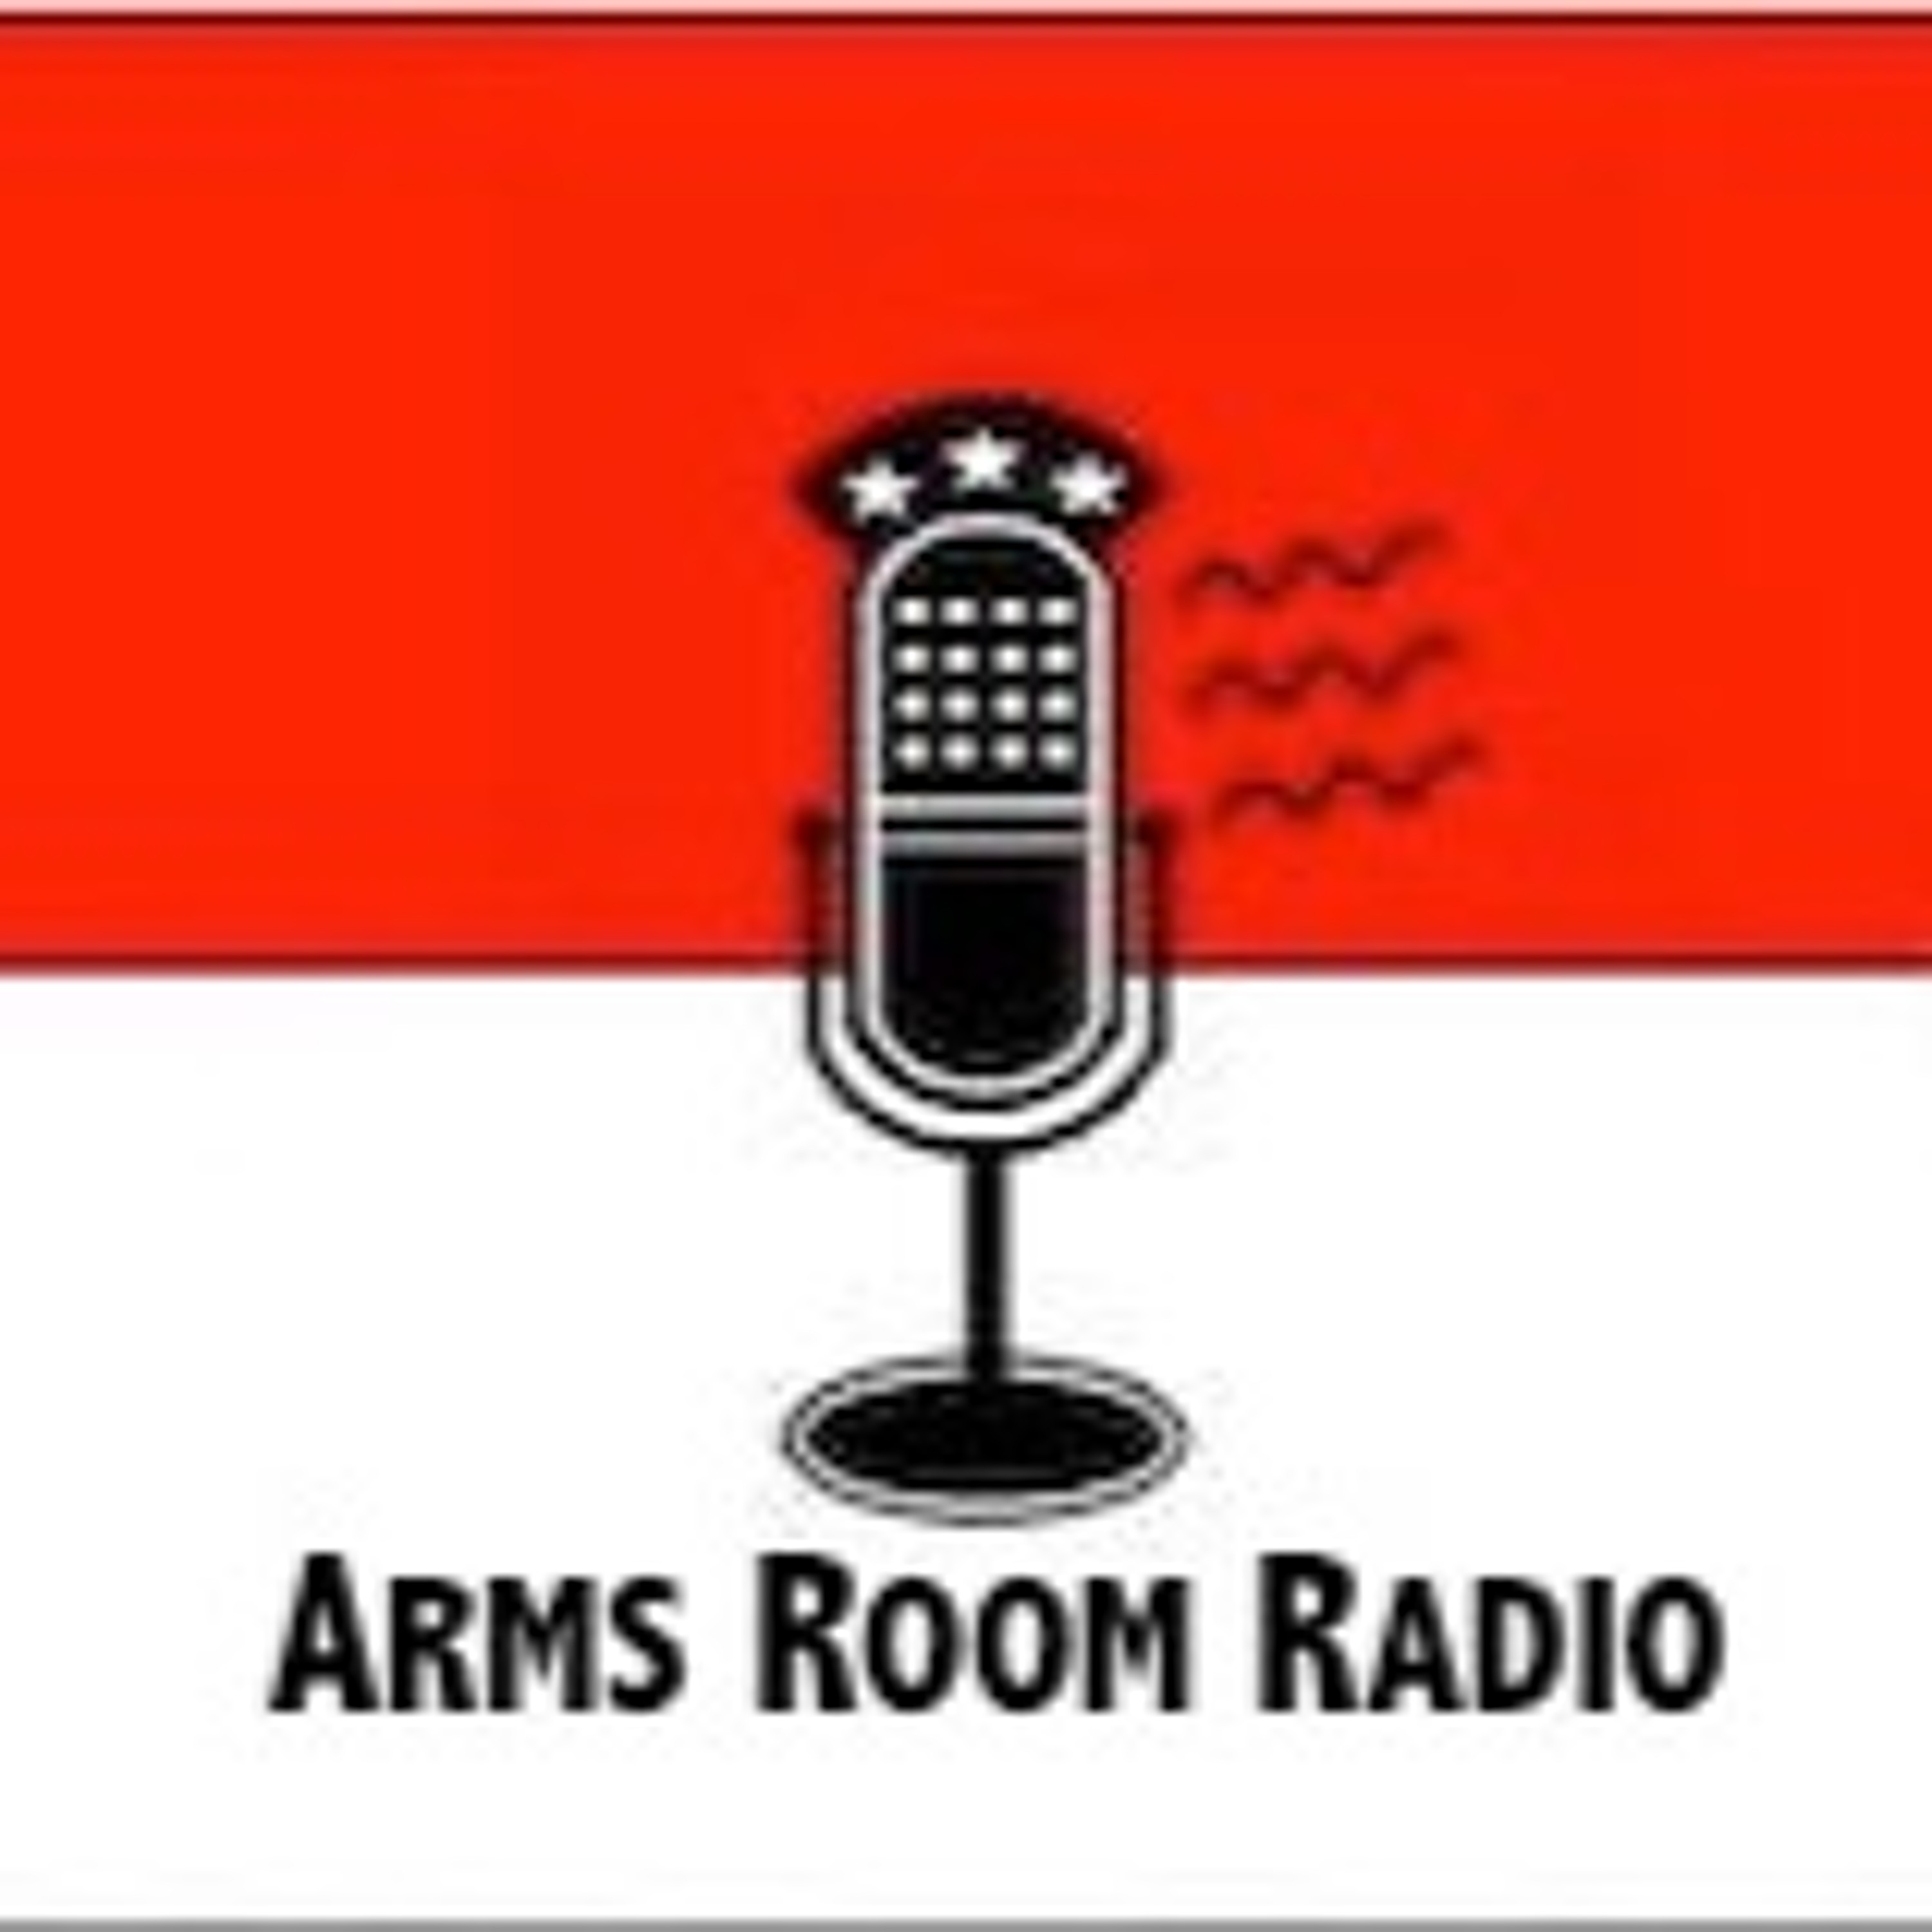 ArmsRoomRadio 01.11.20 Sean Caranna, Holly Webster